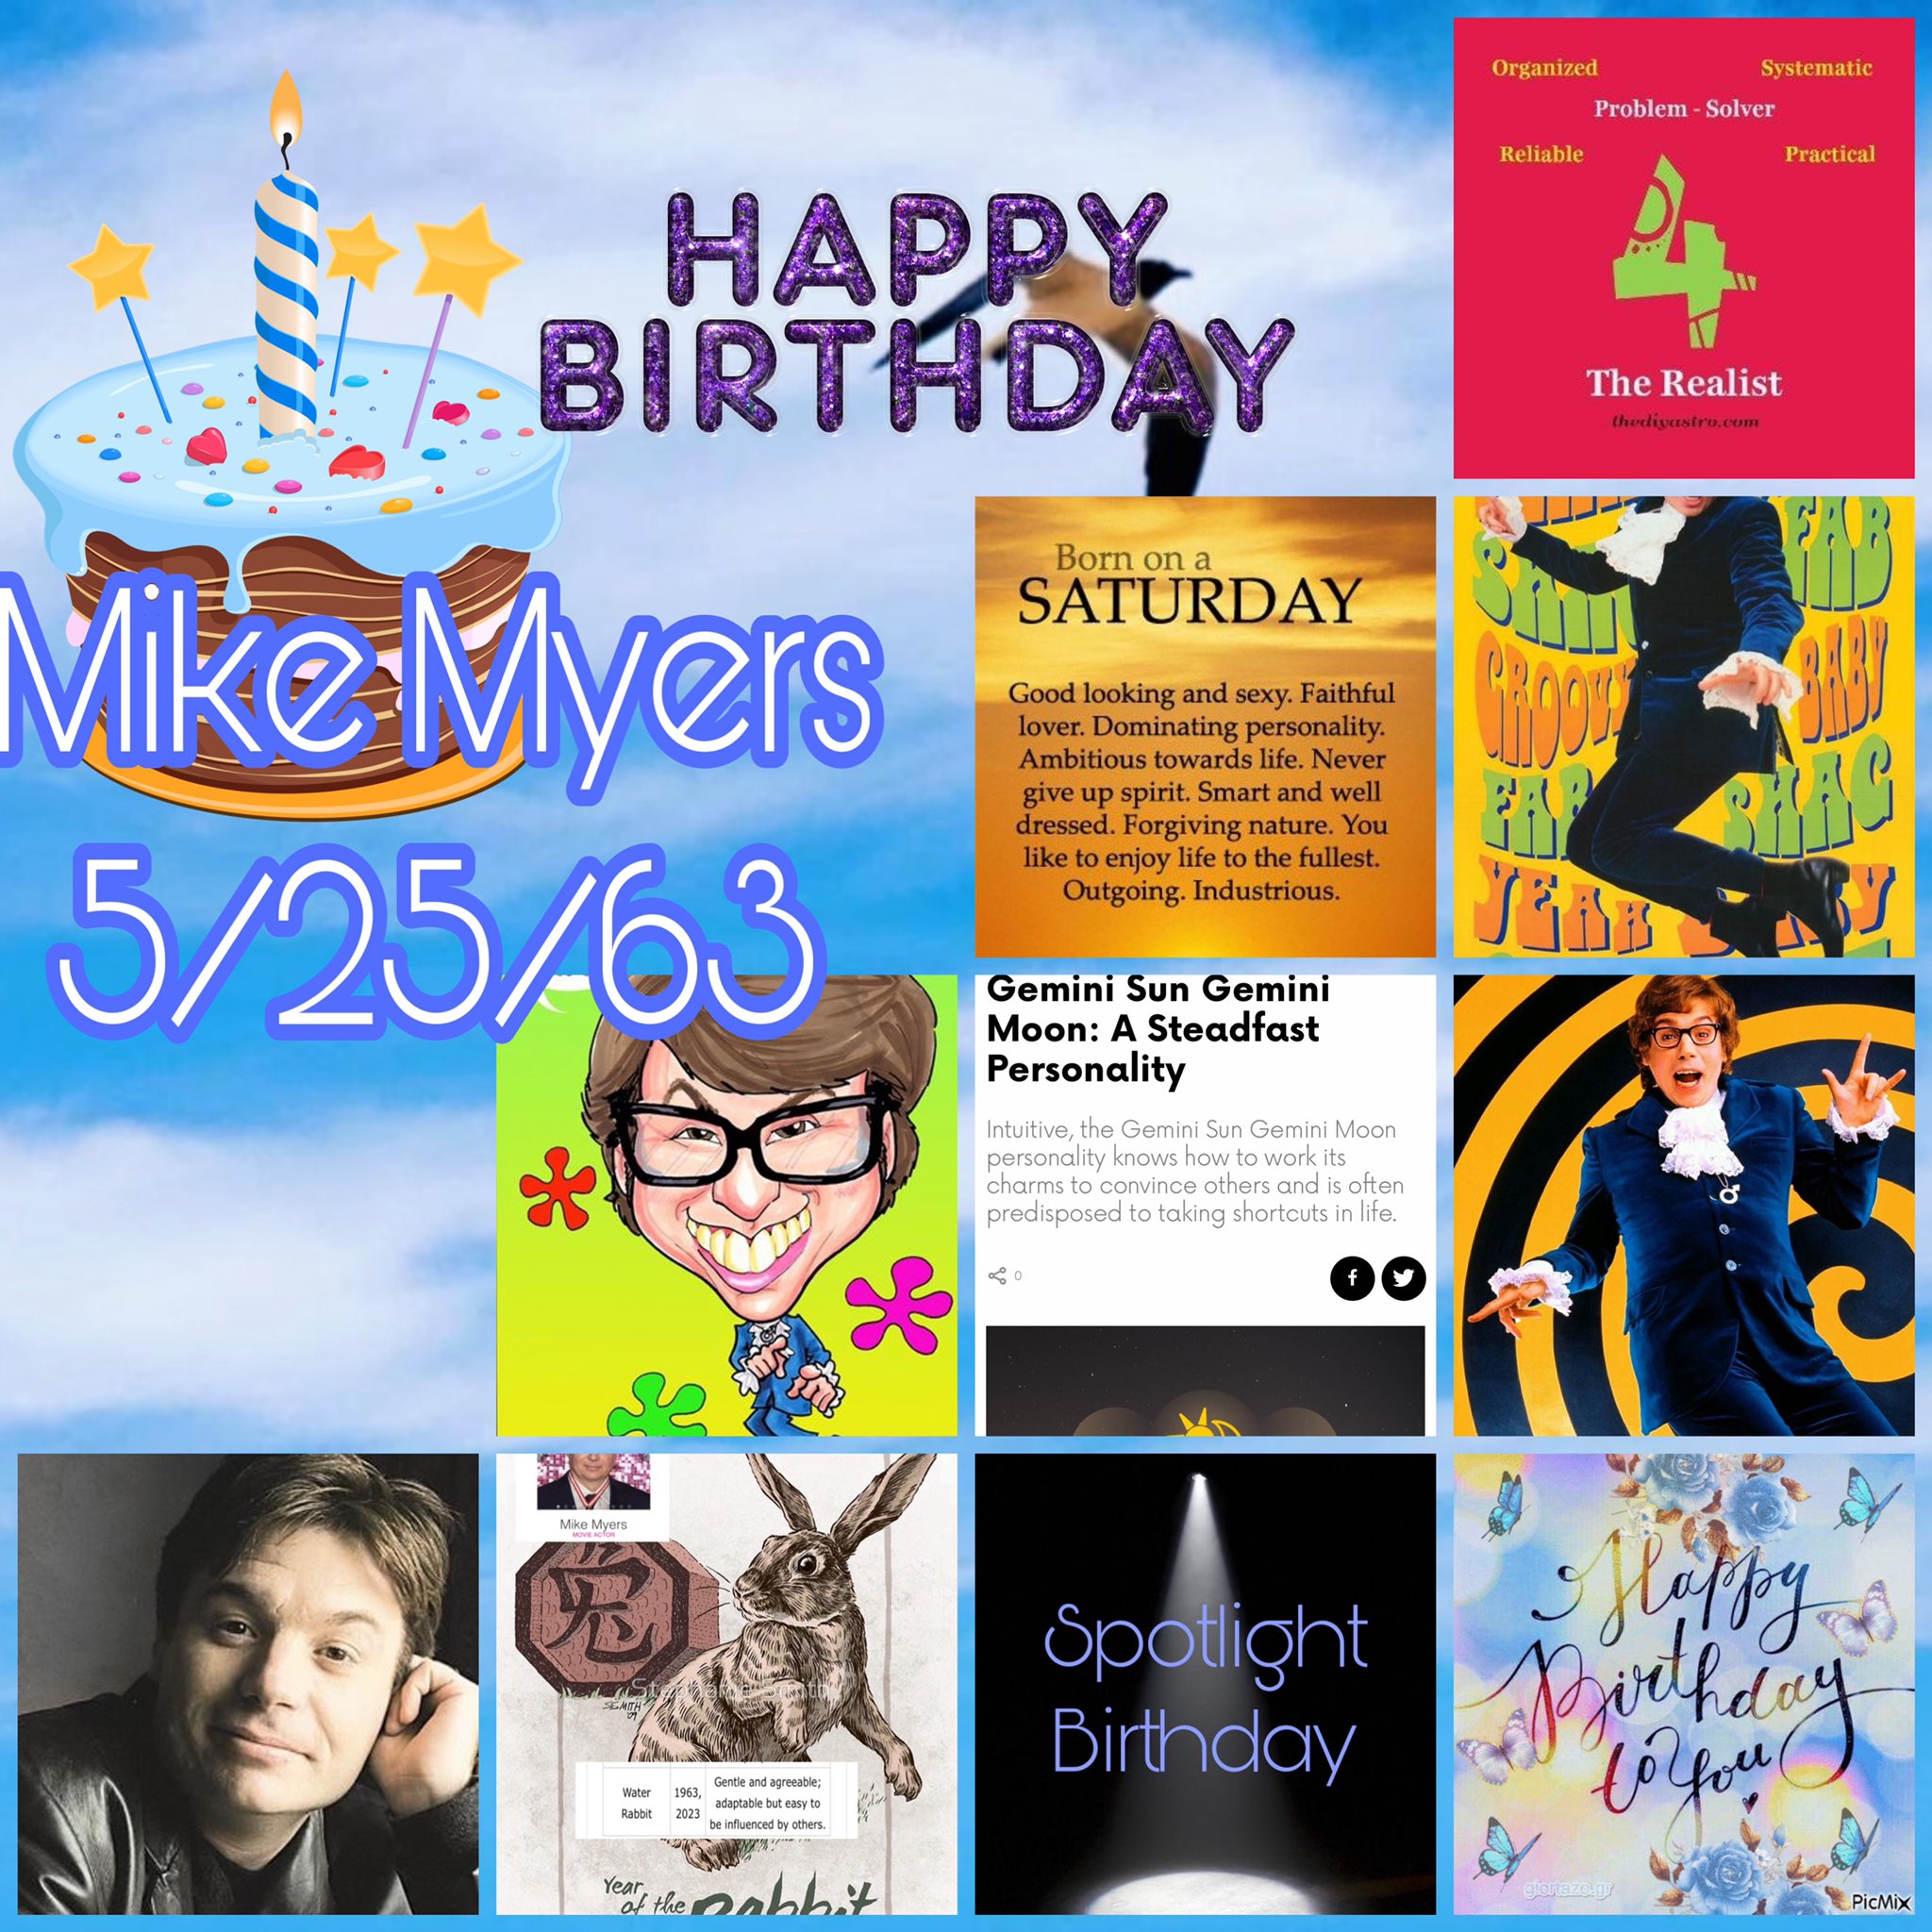 Happy birthday  Austen Powers (Mike Myers) 